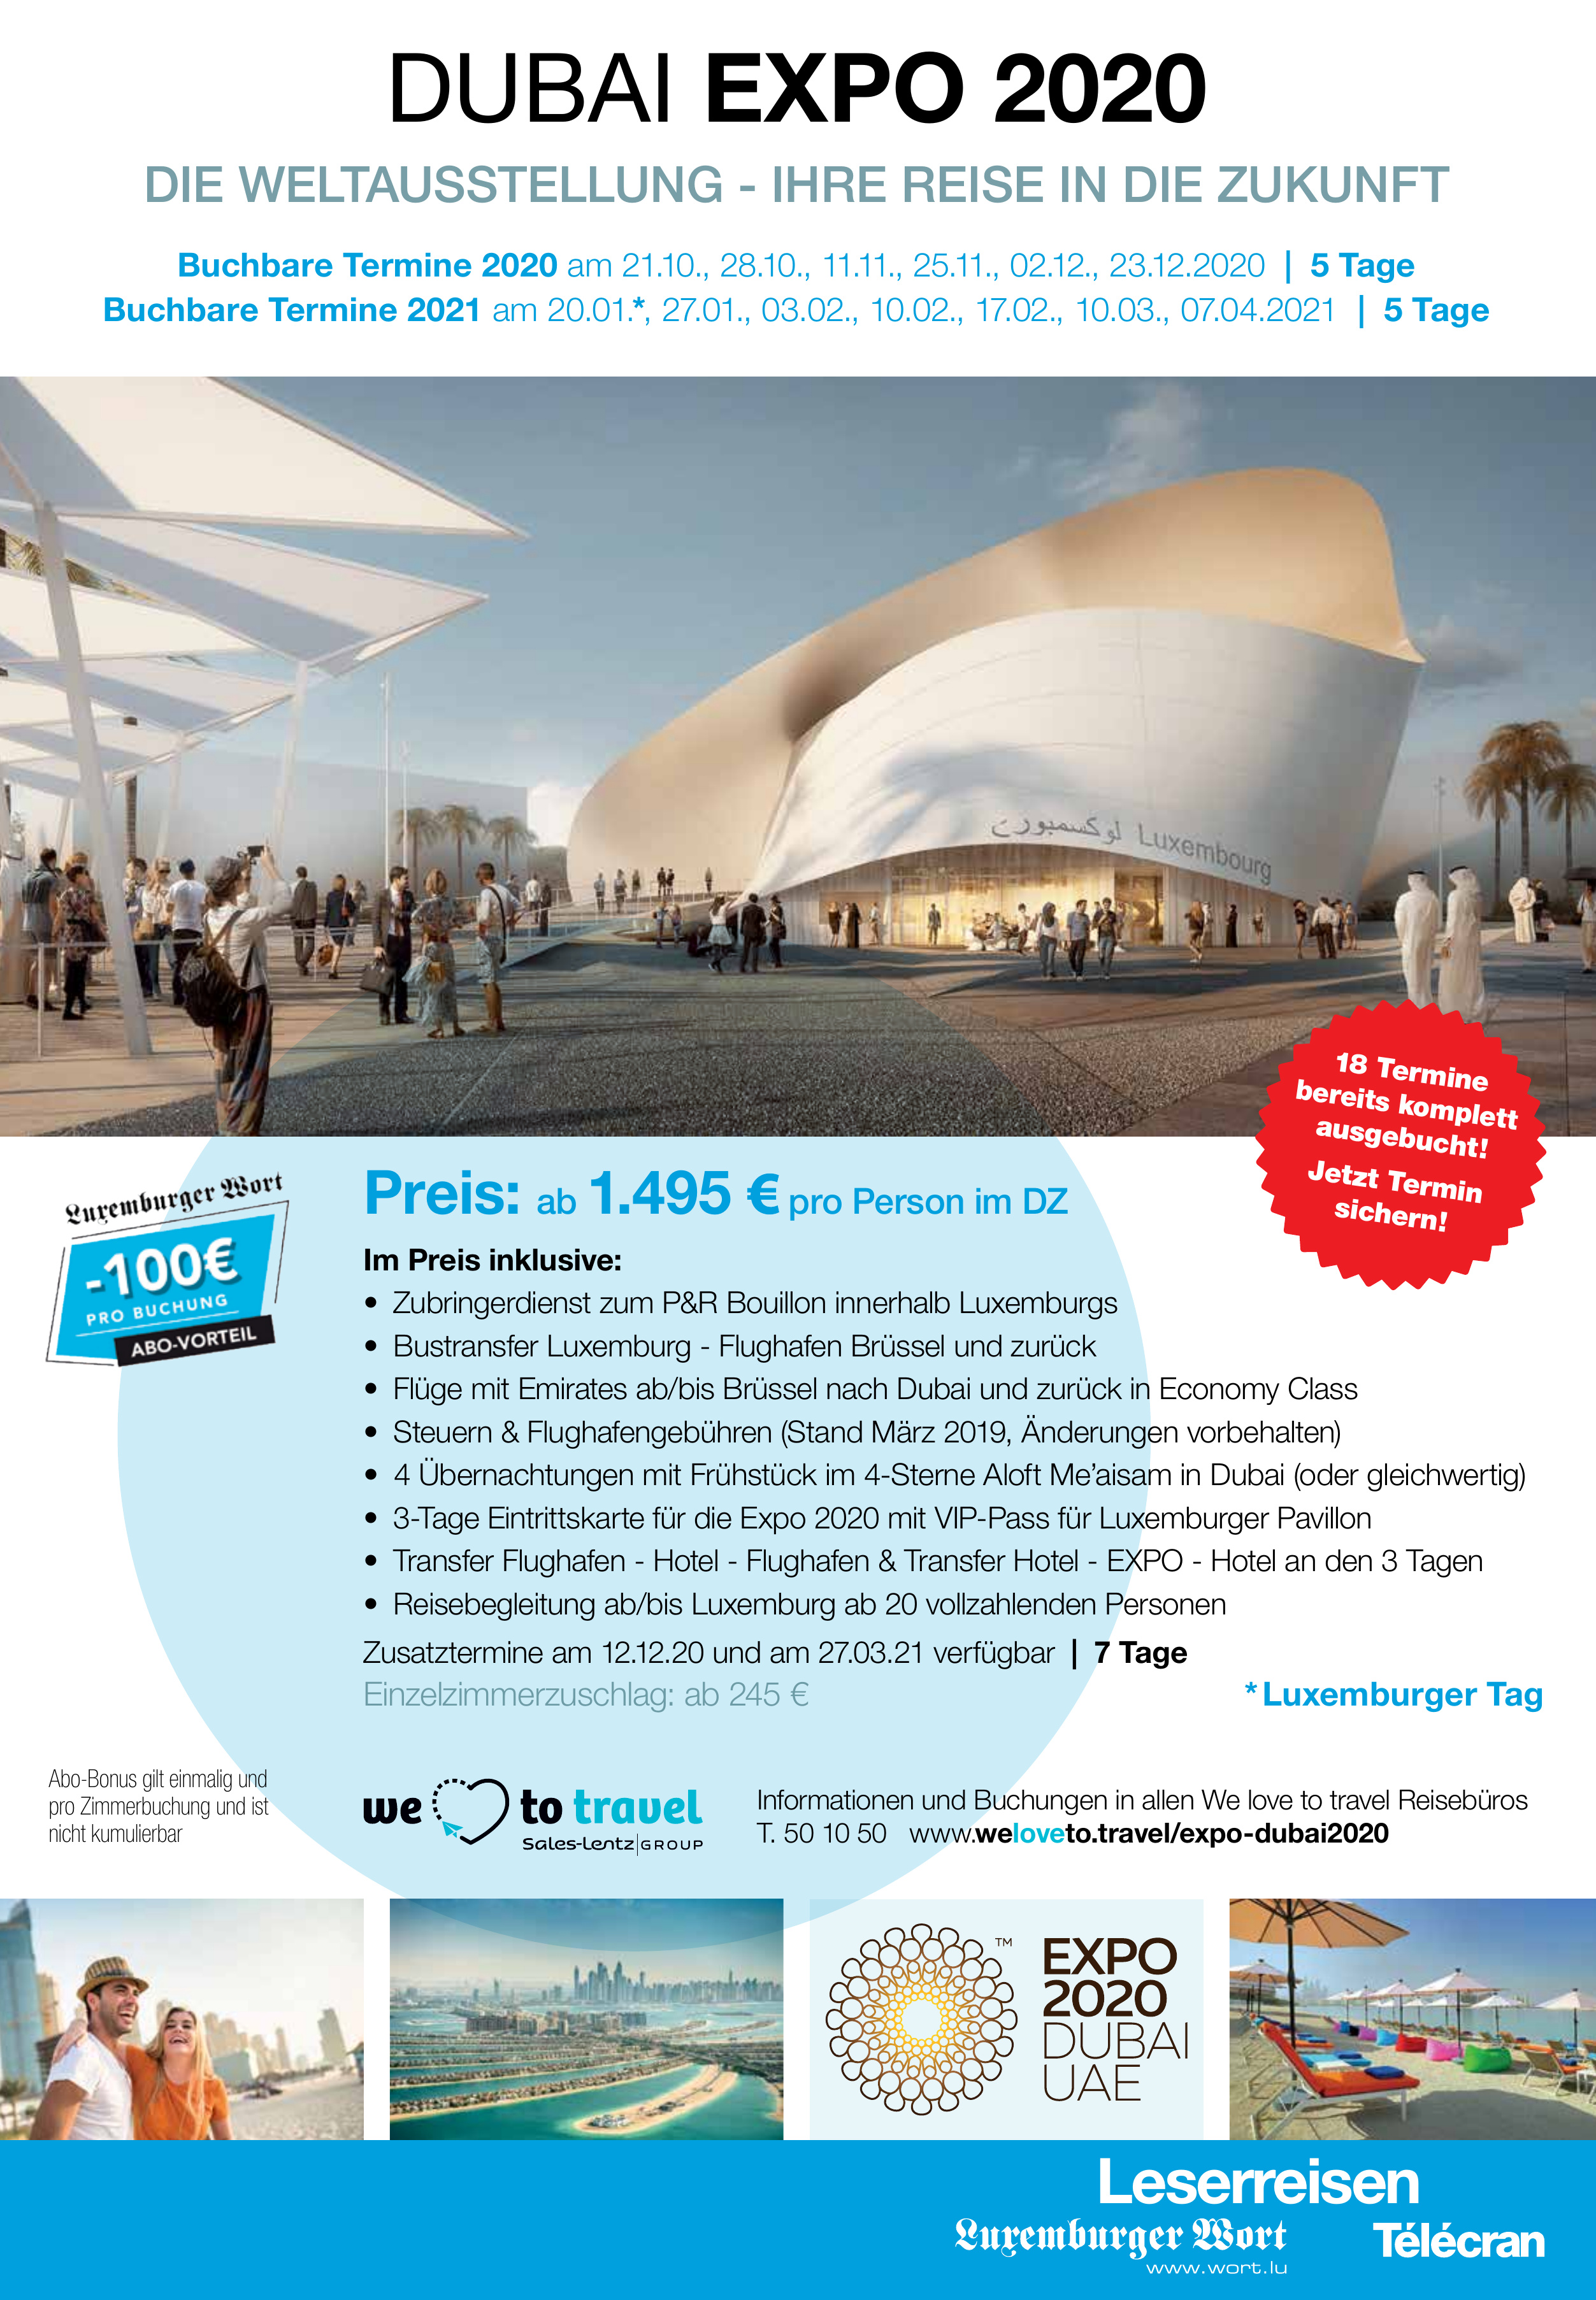 We love to travel - Dubai EXPO 2020